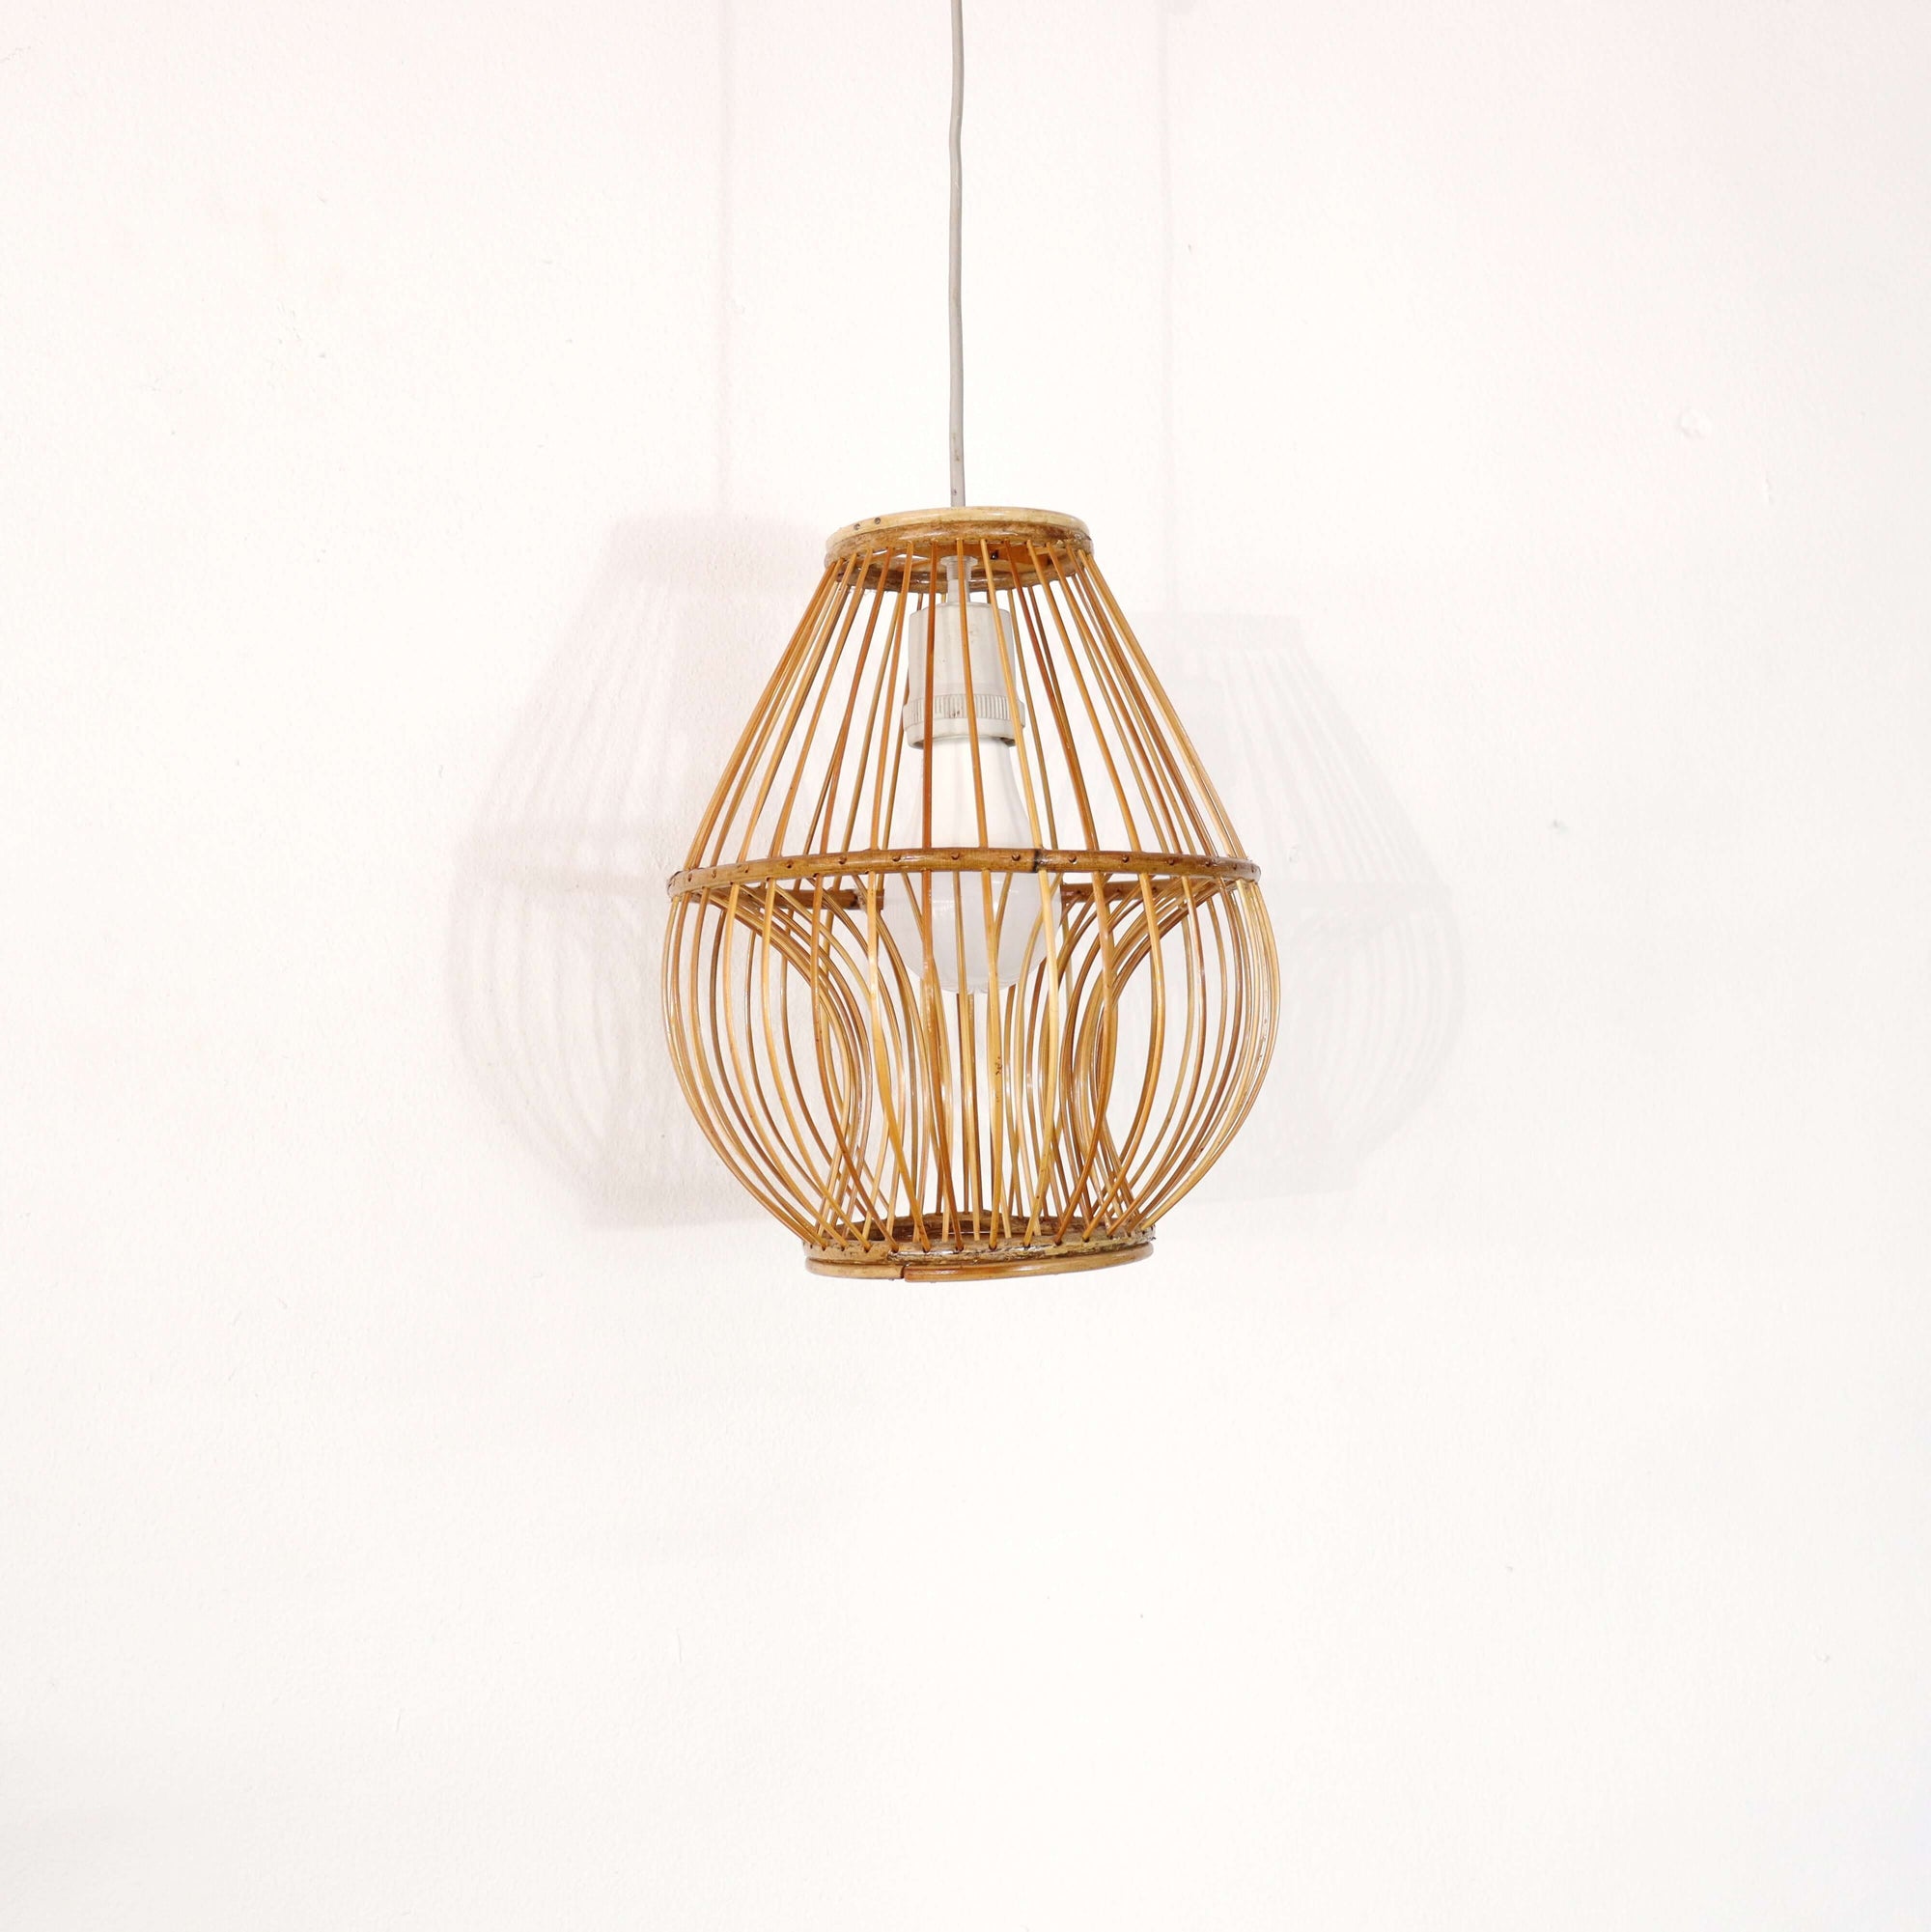 Bamboo & Rattan Pendant Light - CHA NAI